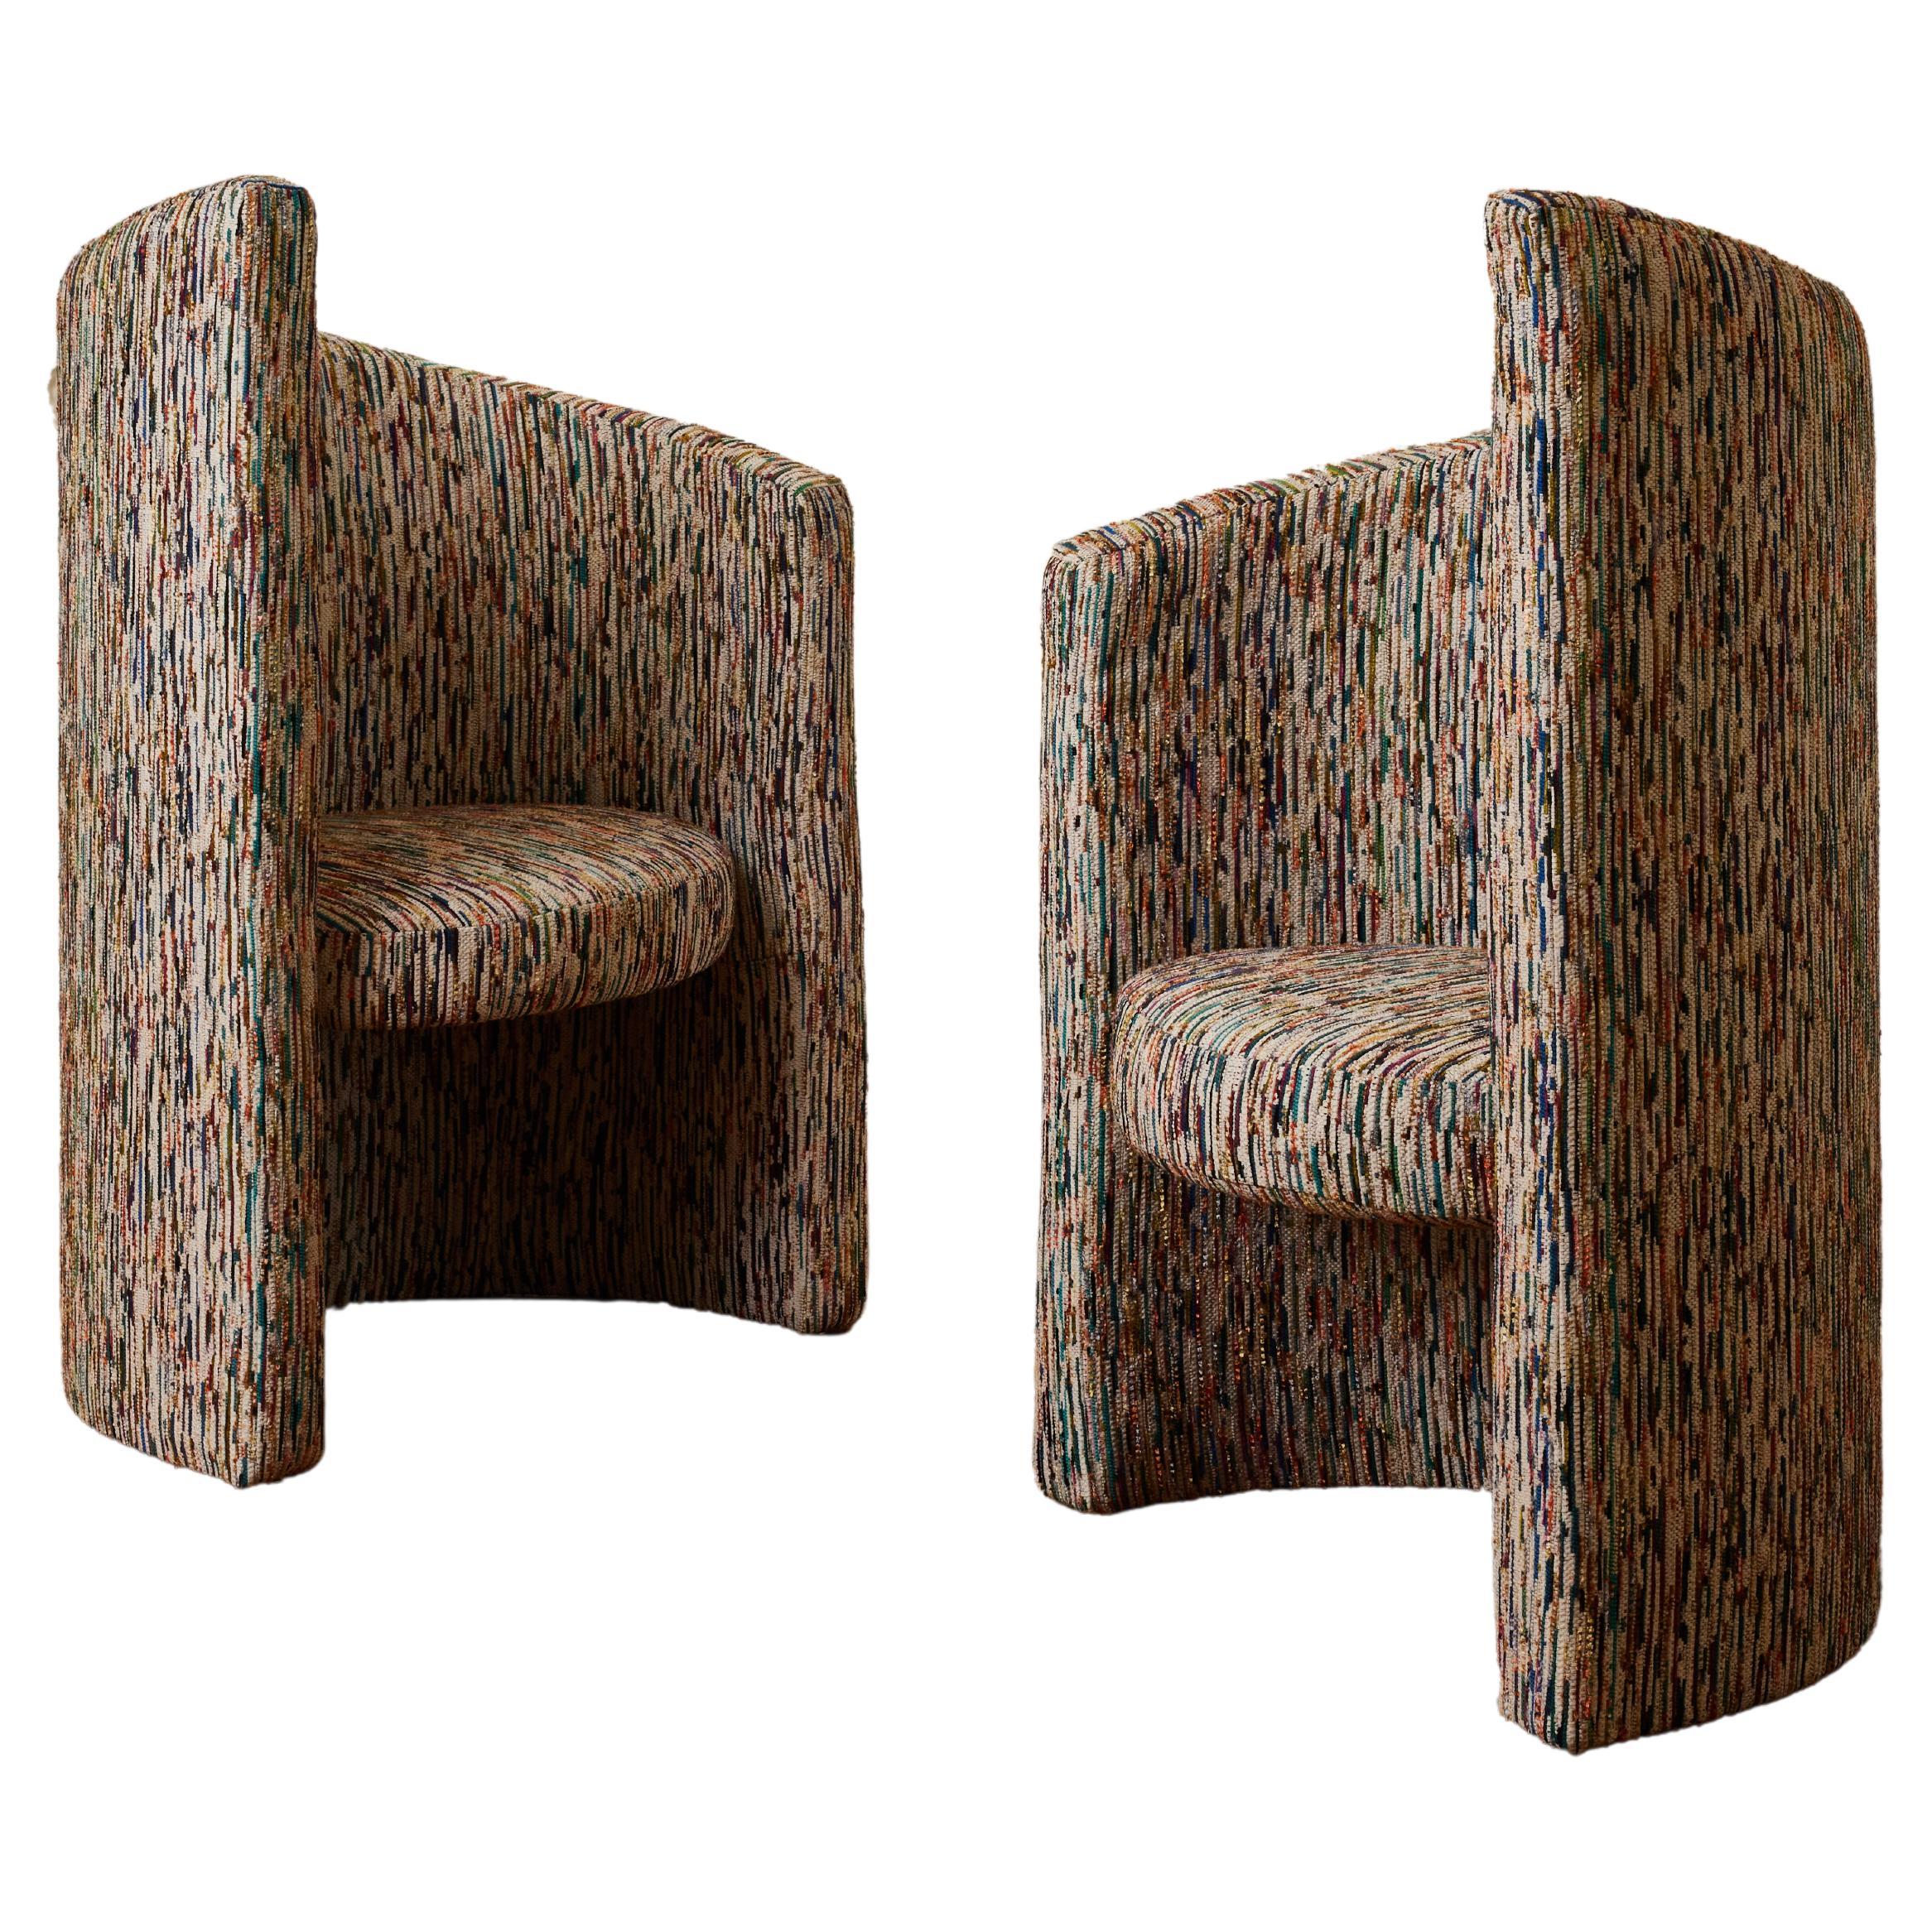 "Barrel" armchairs by Studio Glustin For Sale